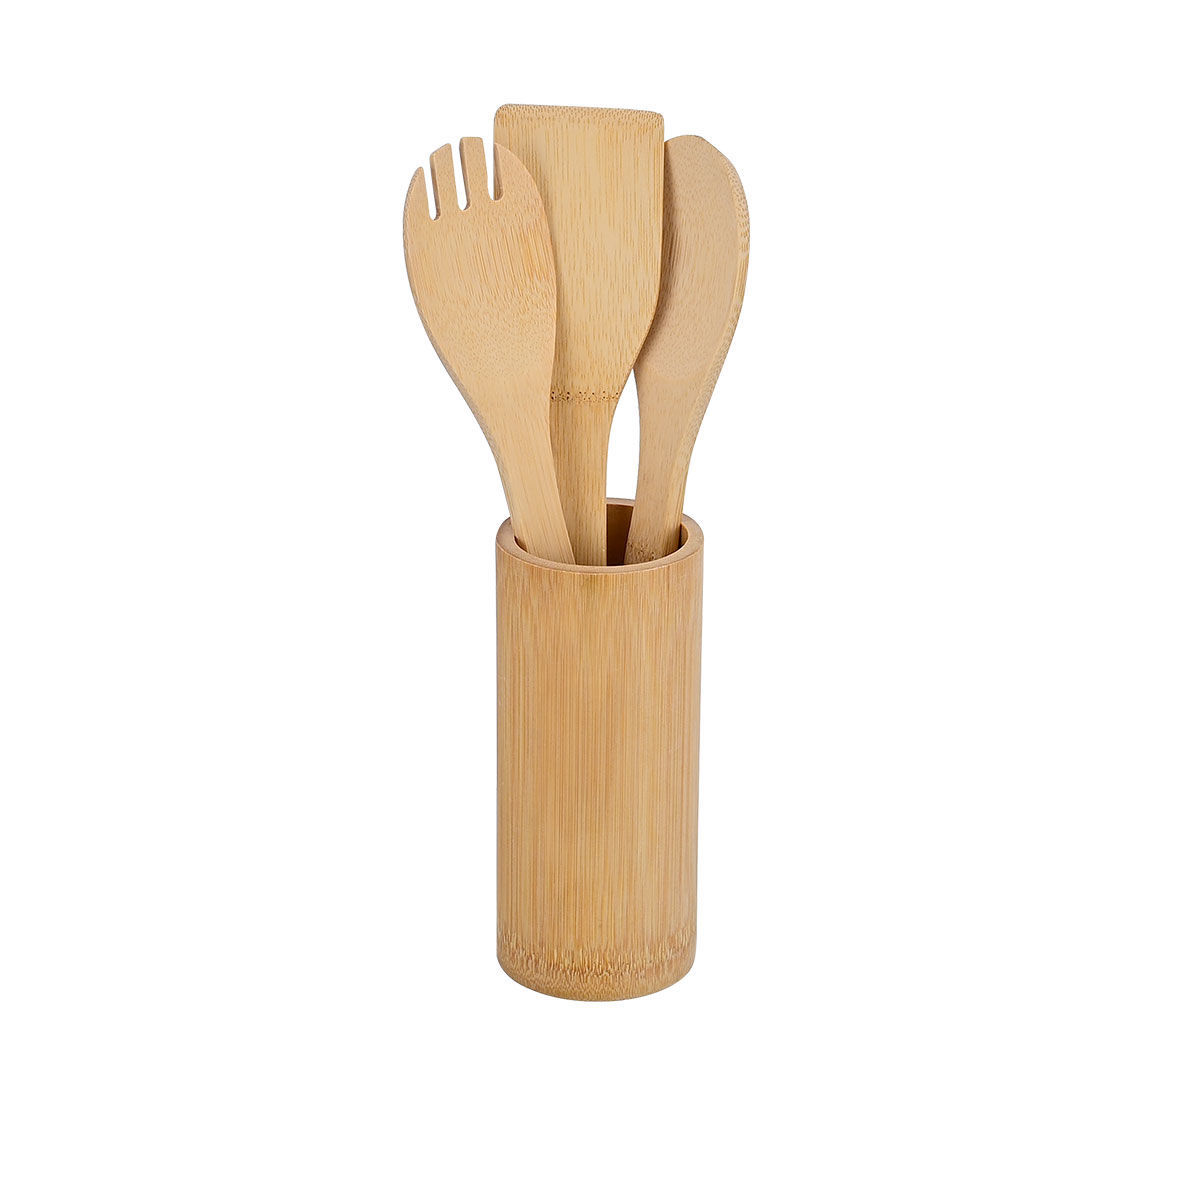 estia Εργαλεία Μαγειρικής Σετ 4τμχ Με Θήκη Bamboo Essentials Estia 02-18191 (Υλικό: Bamboo) - estia - 02-18191